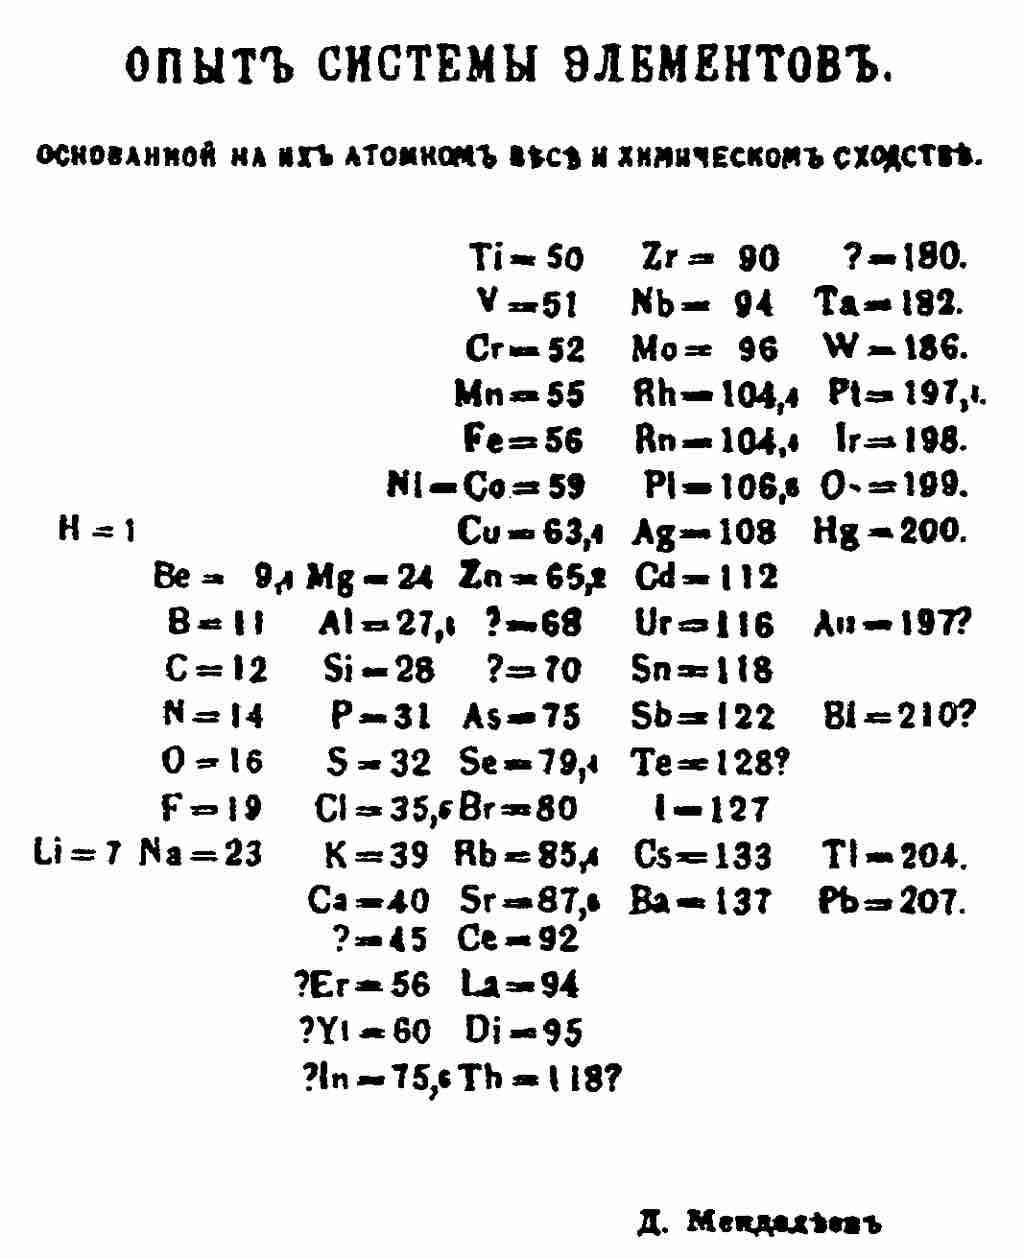 Mendeleev's 1869 Periodic Table